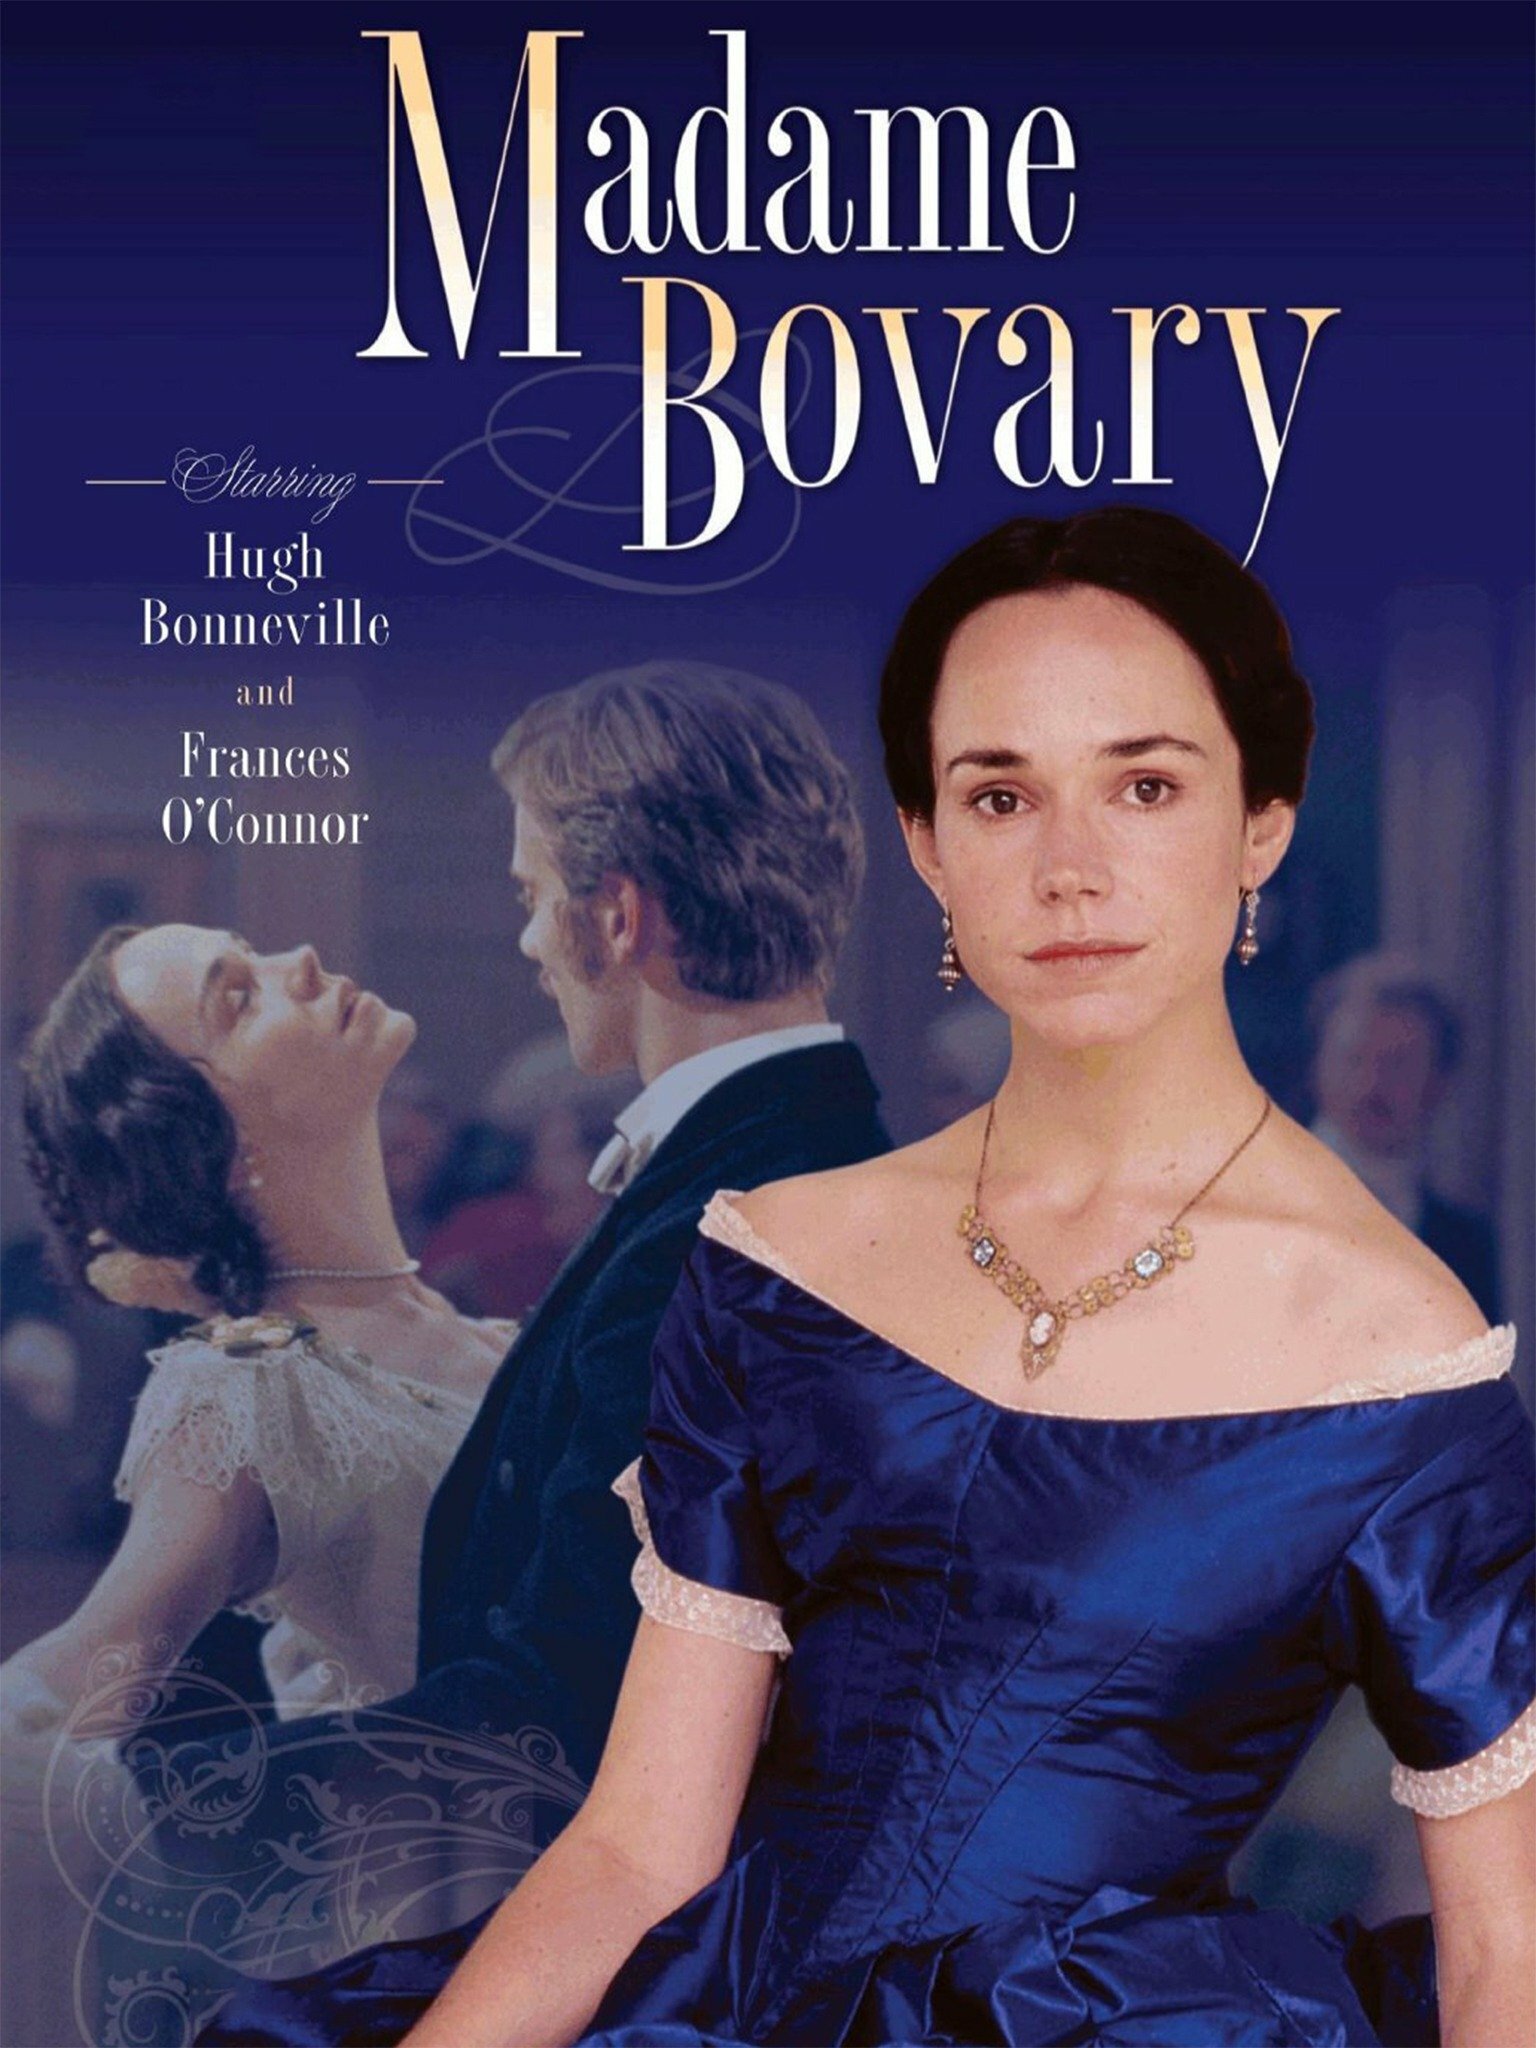 Madame Bovary ne zaman